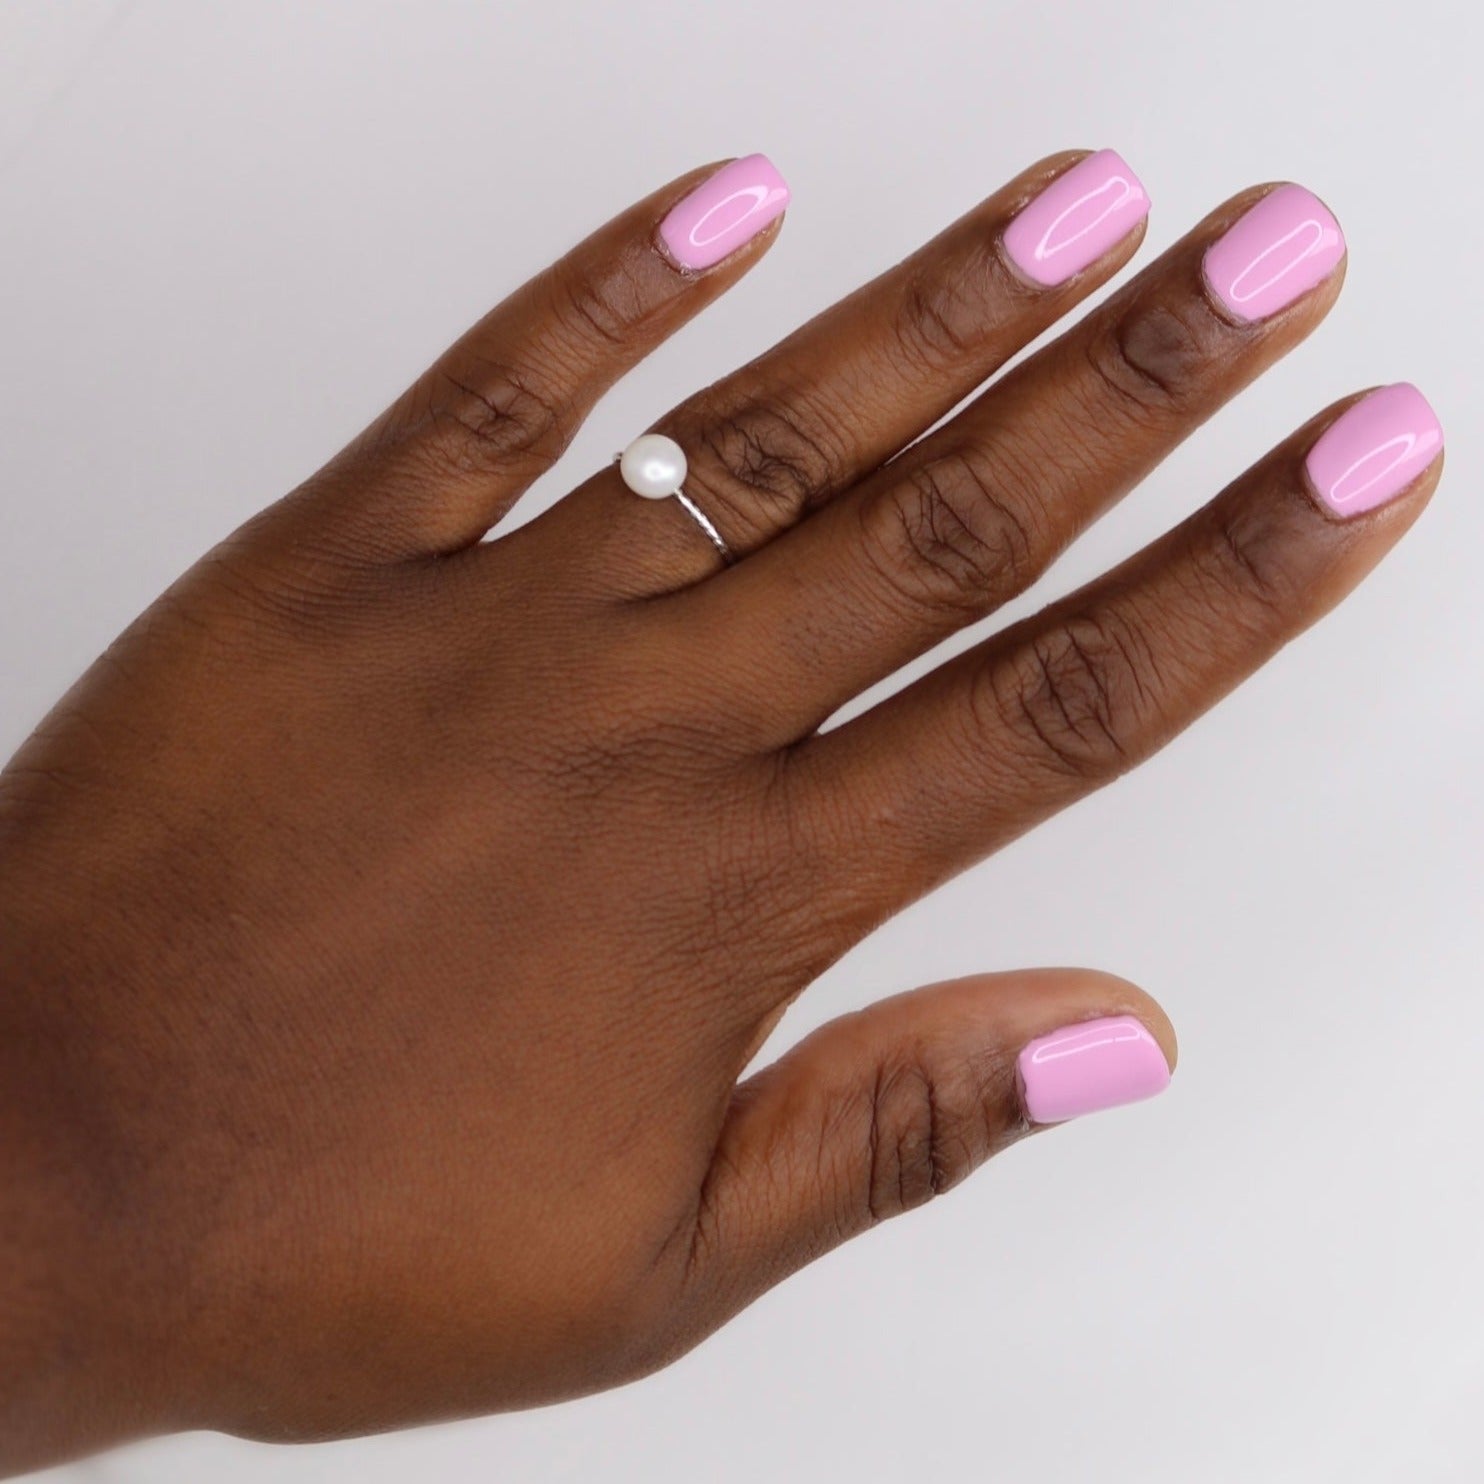 25 Utterly Superb Nail Colors for Dark Skin | Nail colors, Nails, Colors  for dark skin